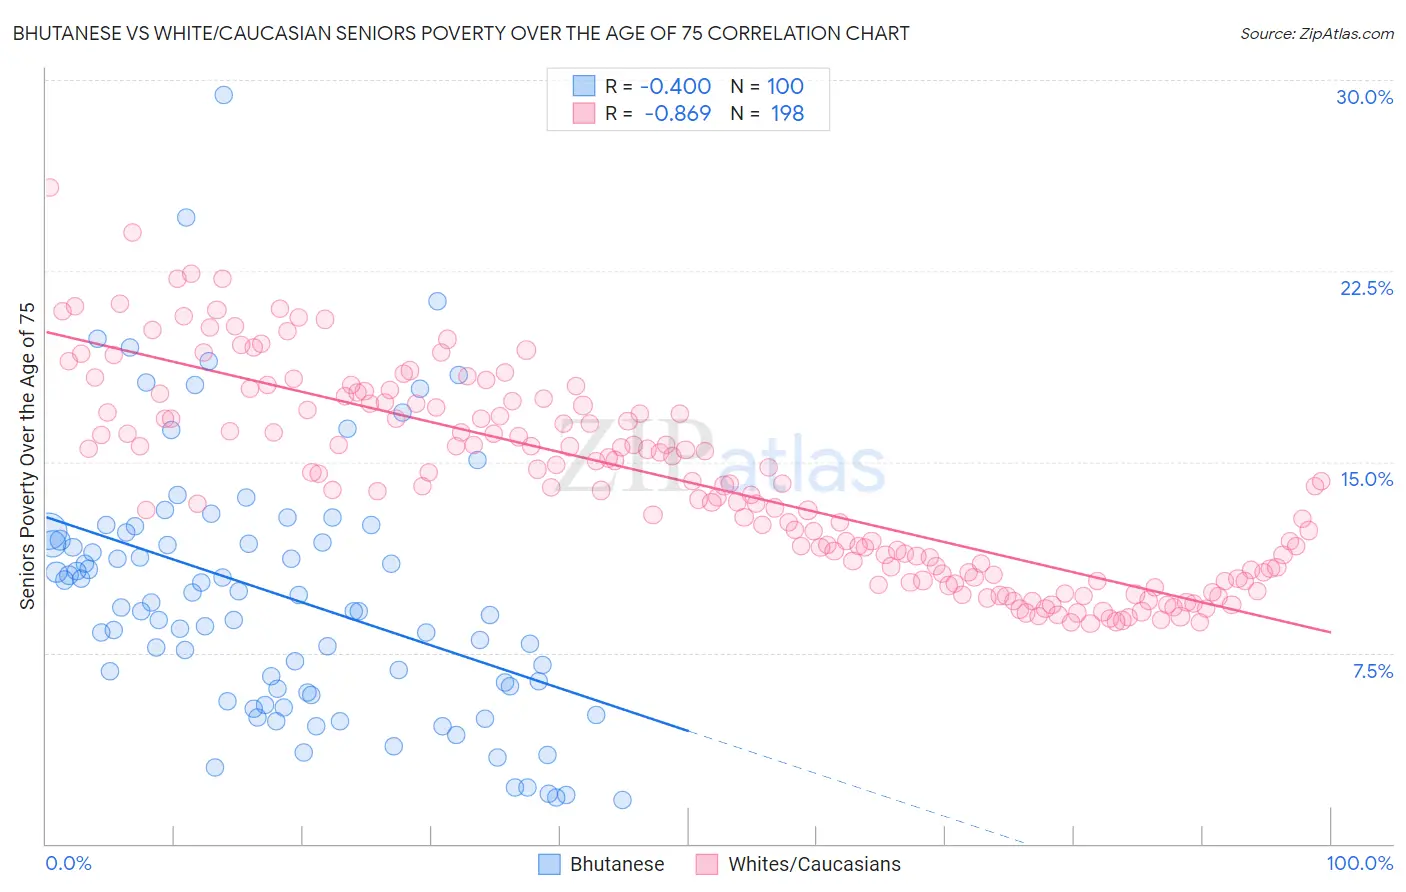 Bhutanese vs White/Caucasian Seniors Poverty Over the Age of 75